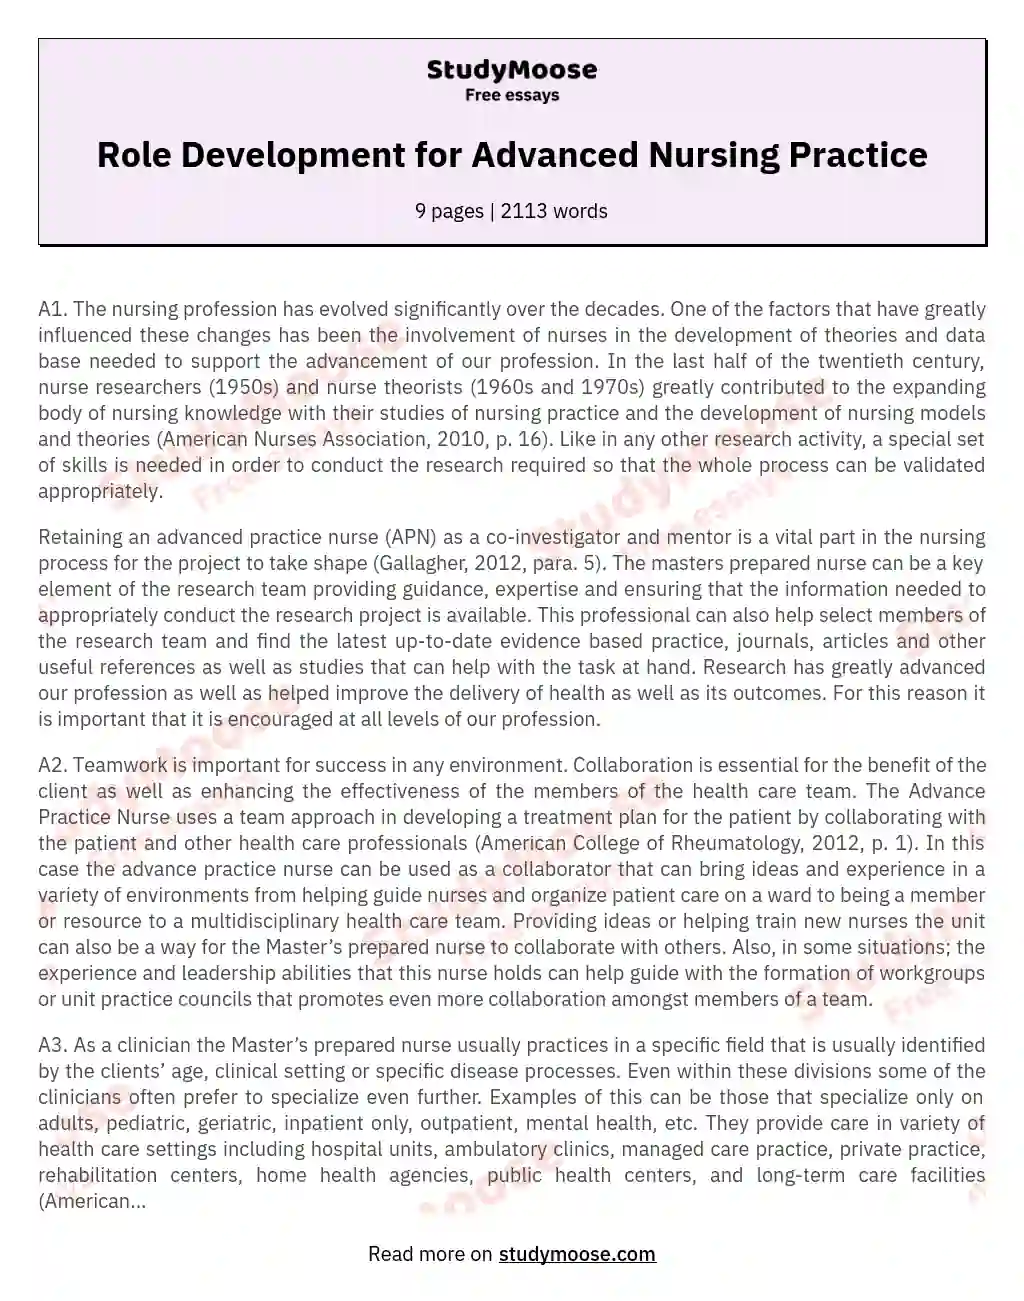 Role Development for Advanced Nursing Practice essay